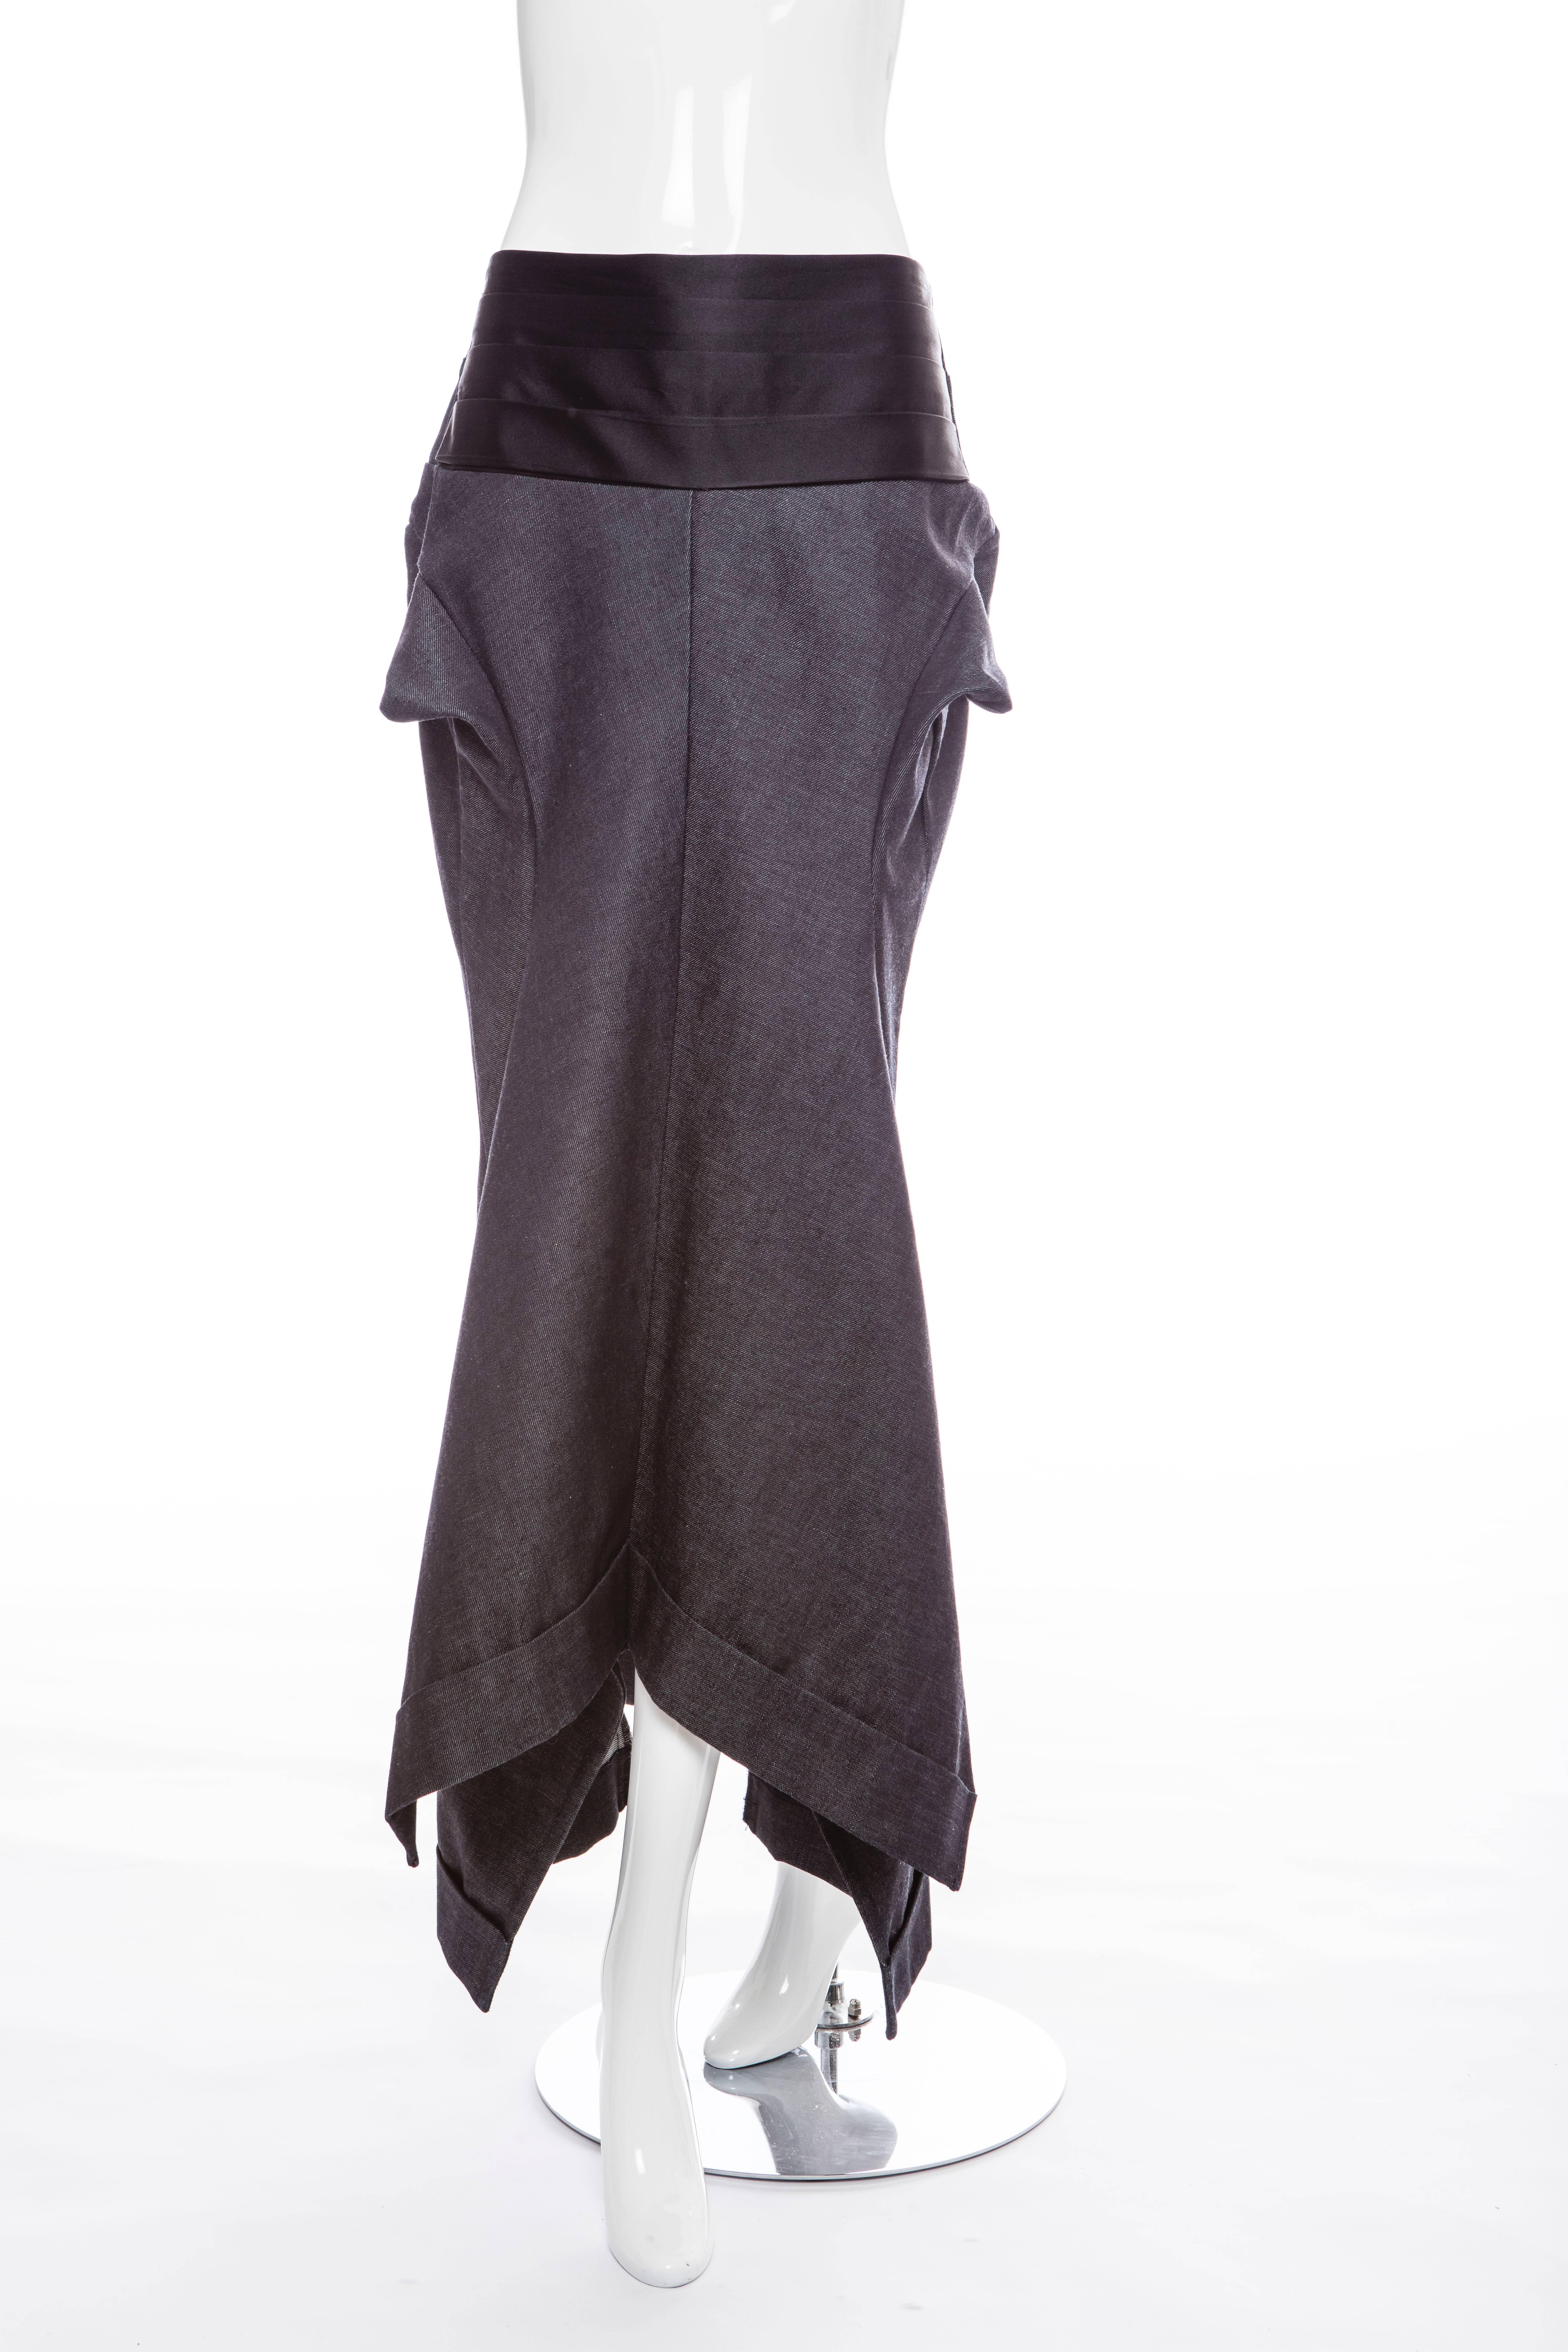 Junya Watanabe for Comme des Garcons, dark denim skirt with black satin cummerbund, invisible back zipper with hook/eye, two back button pockets and cuff hem.